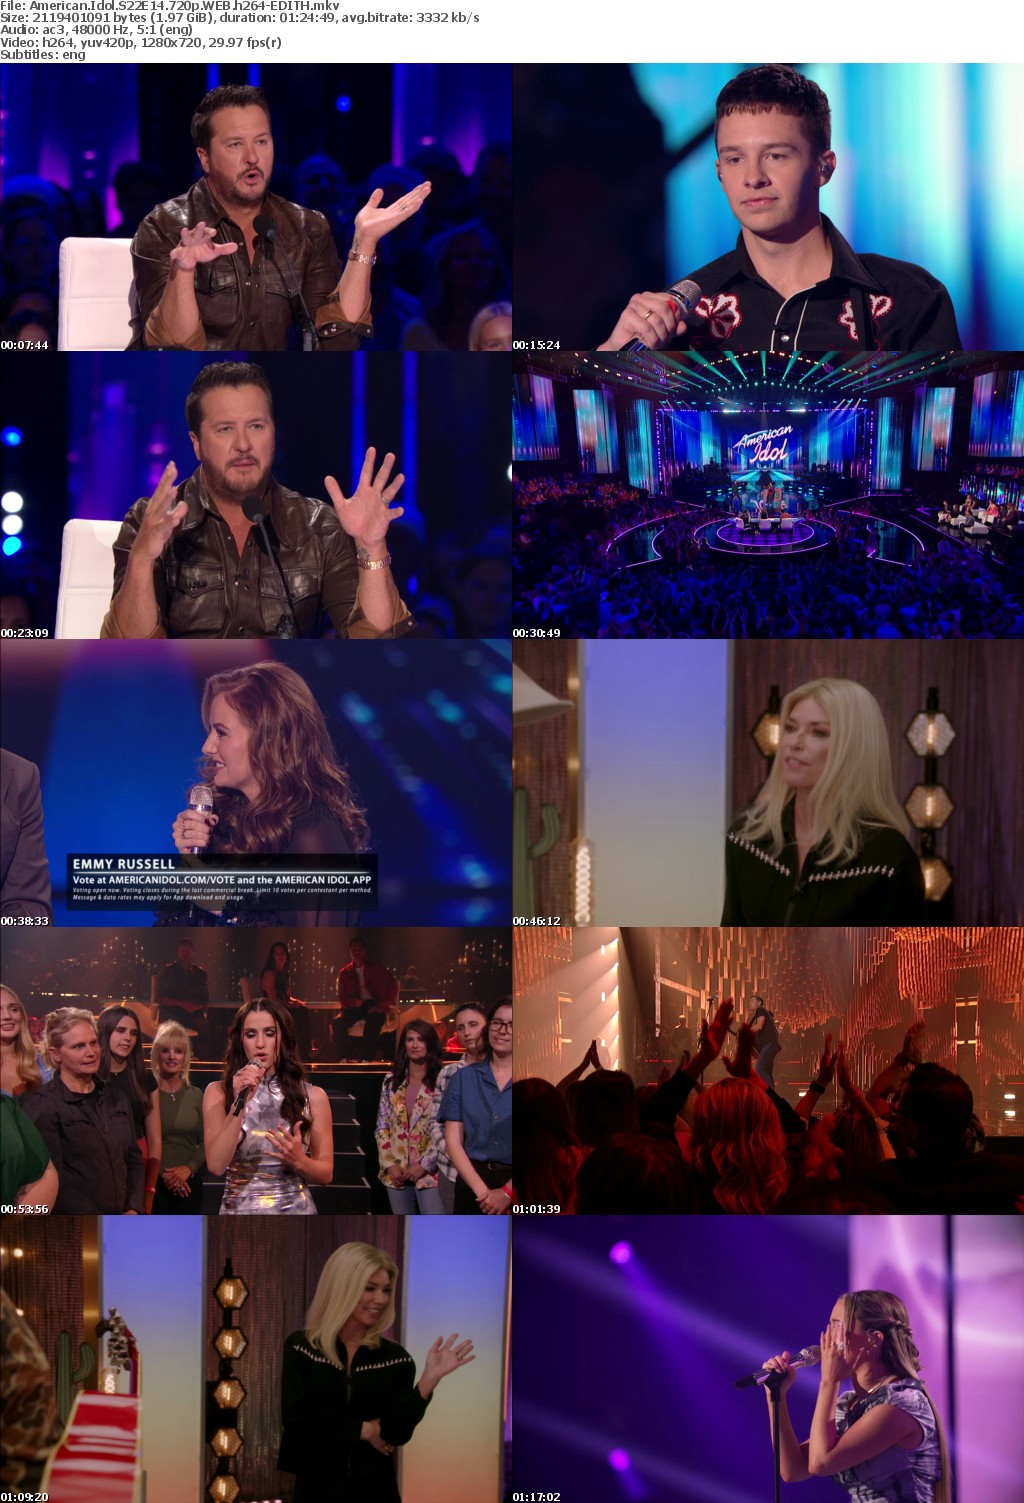 American Idol S22E14 720p WEB h264-EDITH